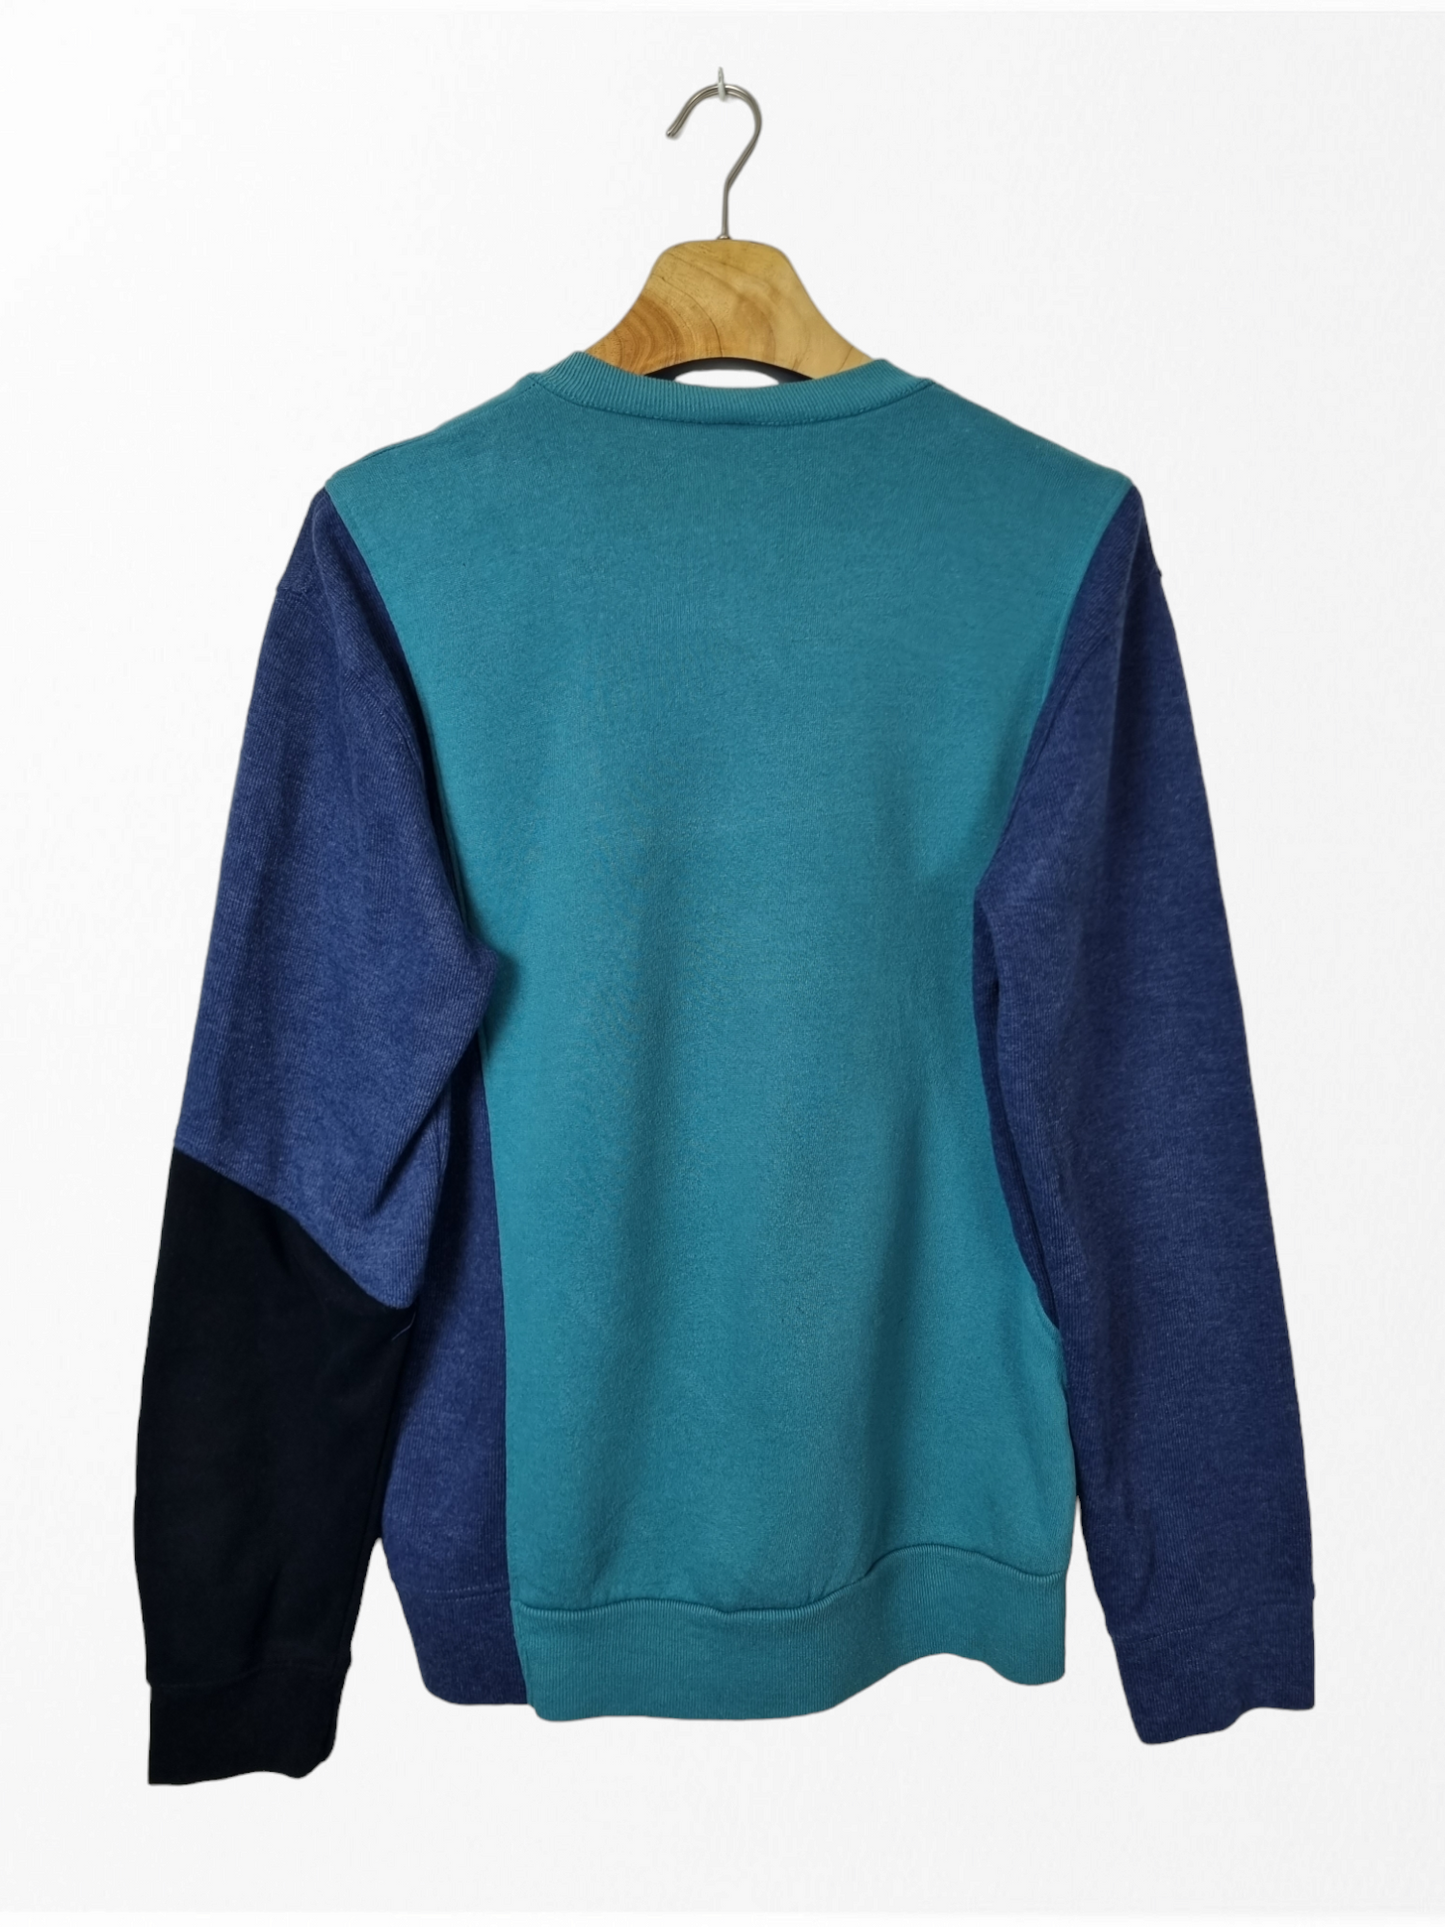 Adidas 90s equipment sweater maat M/L